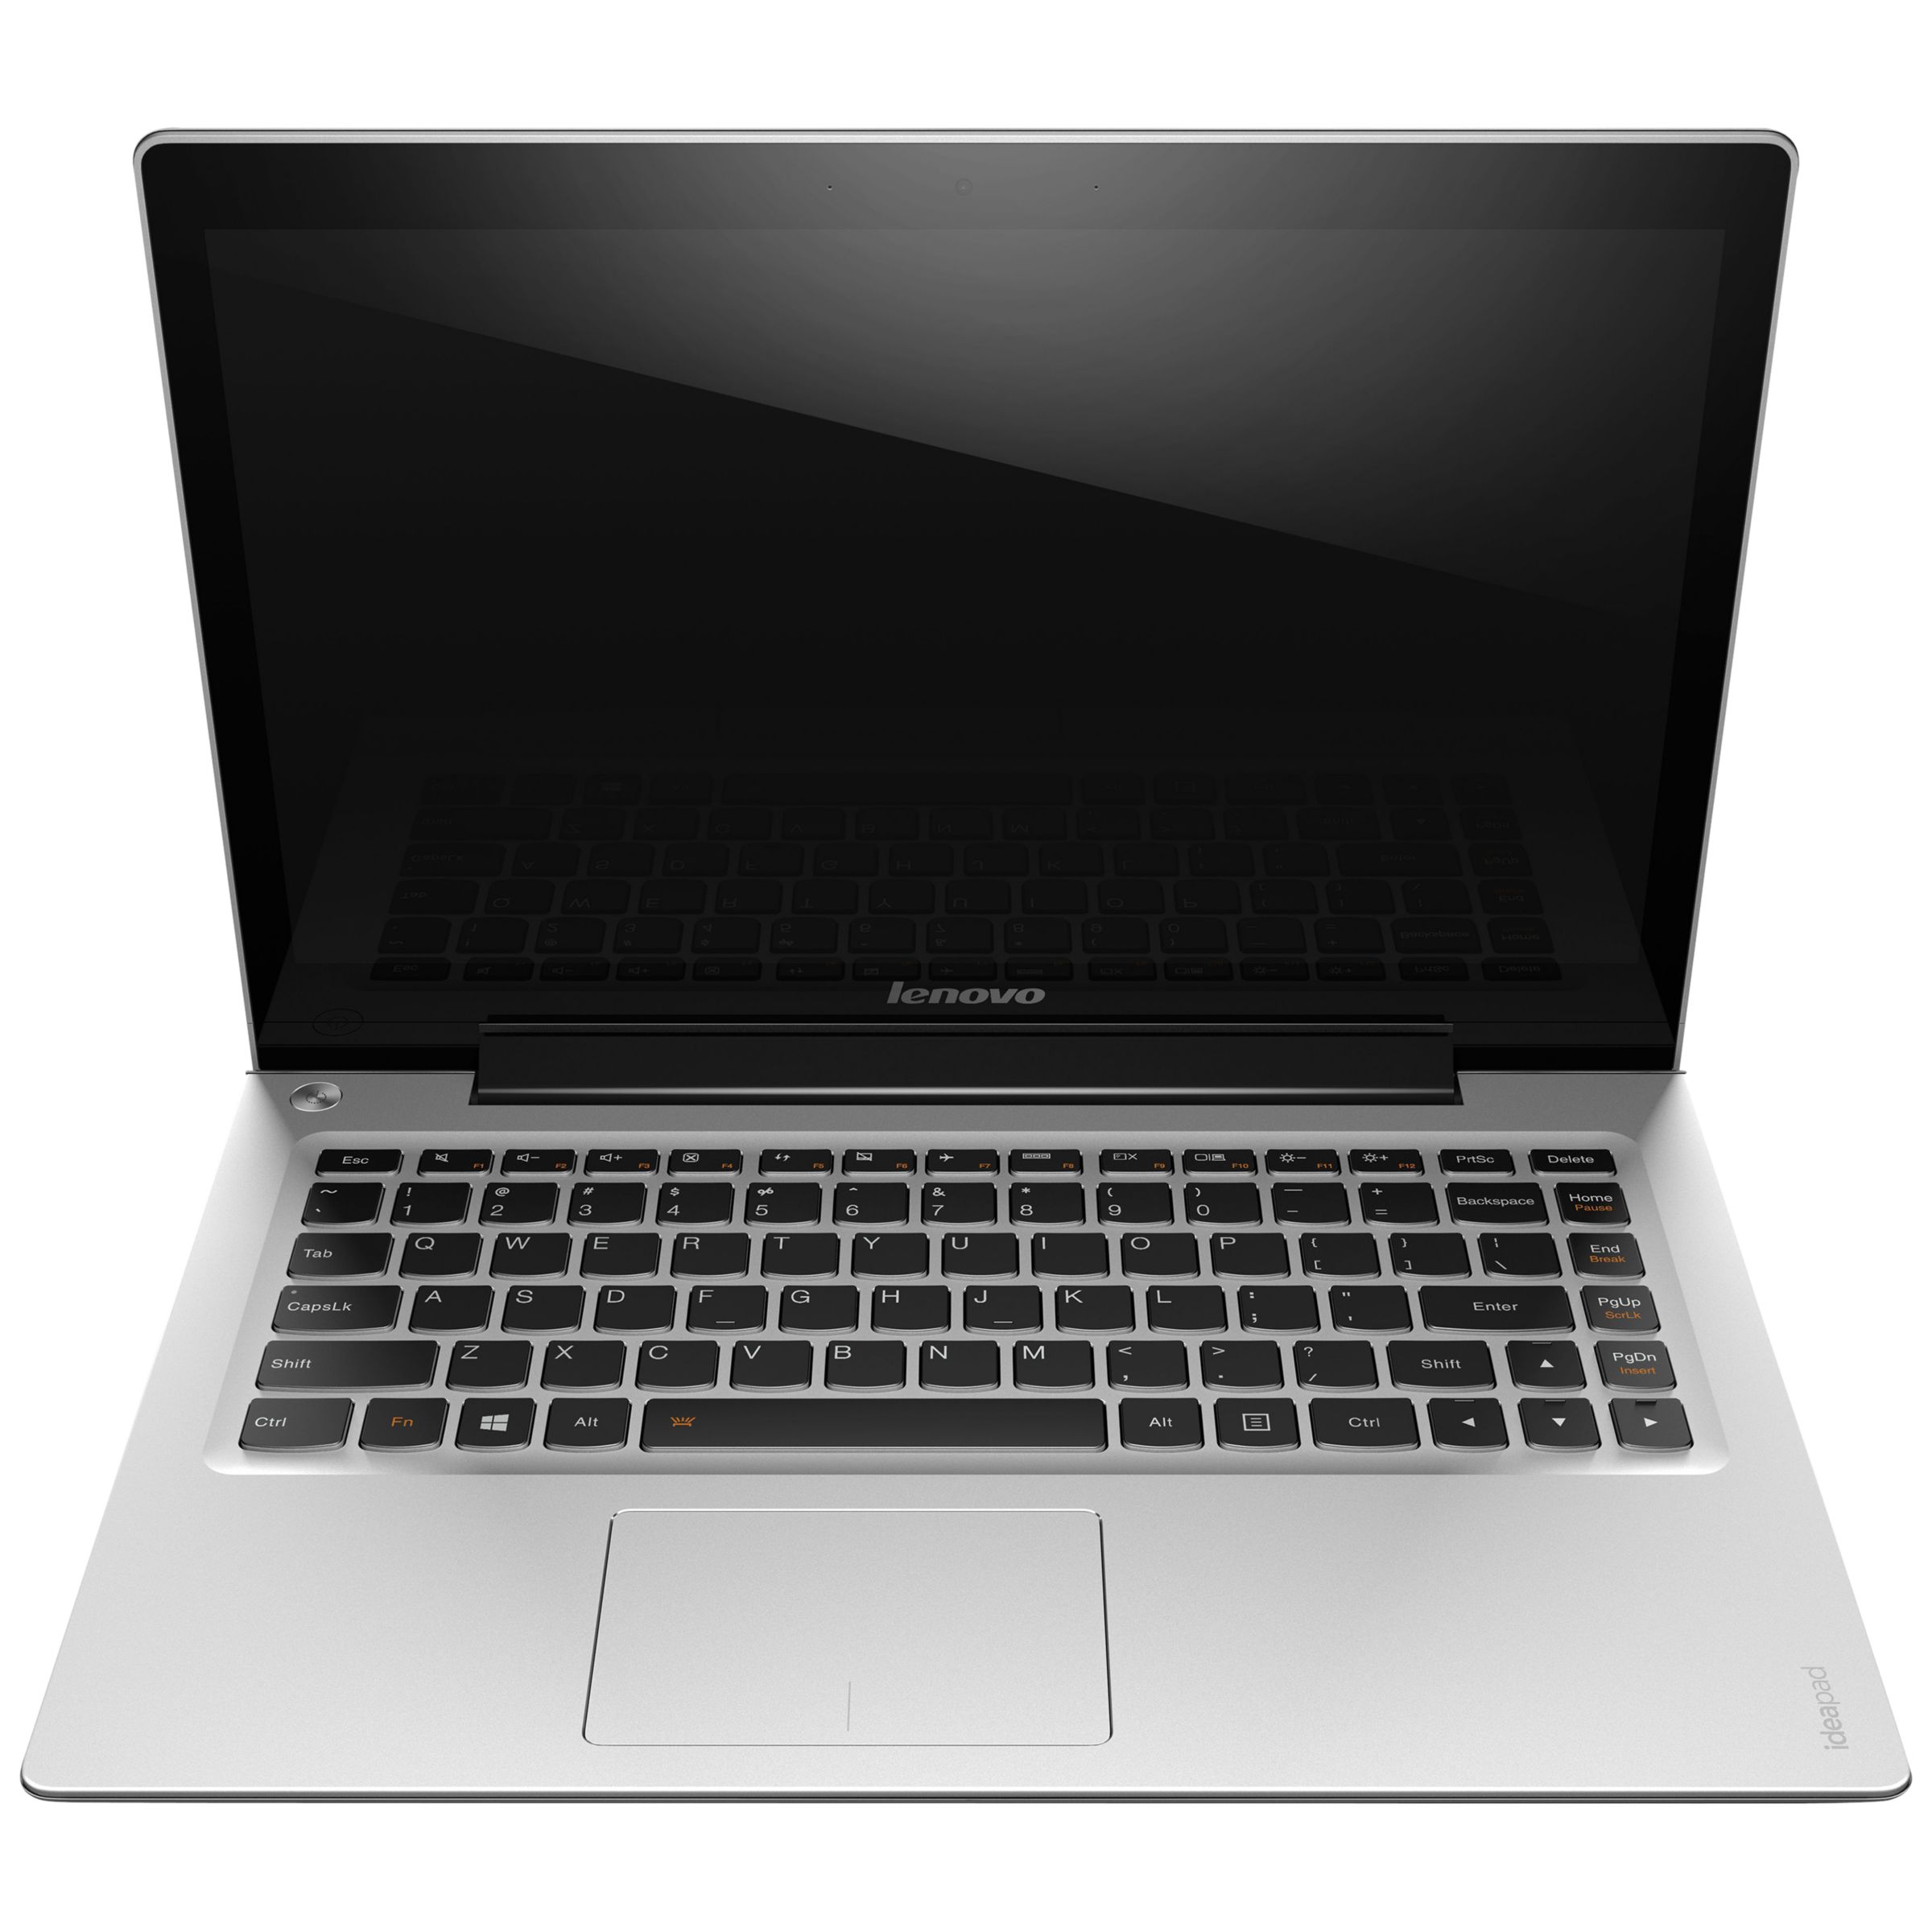 Lenovo IdeaPad U330 Touch Ultrabook, Core i7, 4GB RAM, 500GB 8GB SSD, 13.3" Touch Screen, Grey